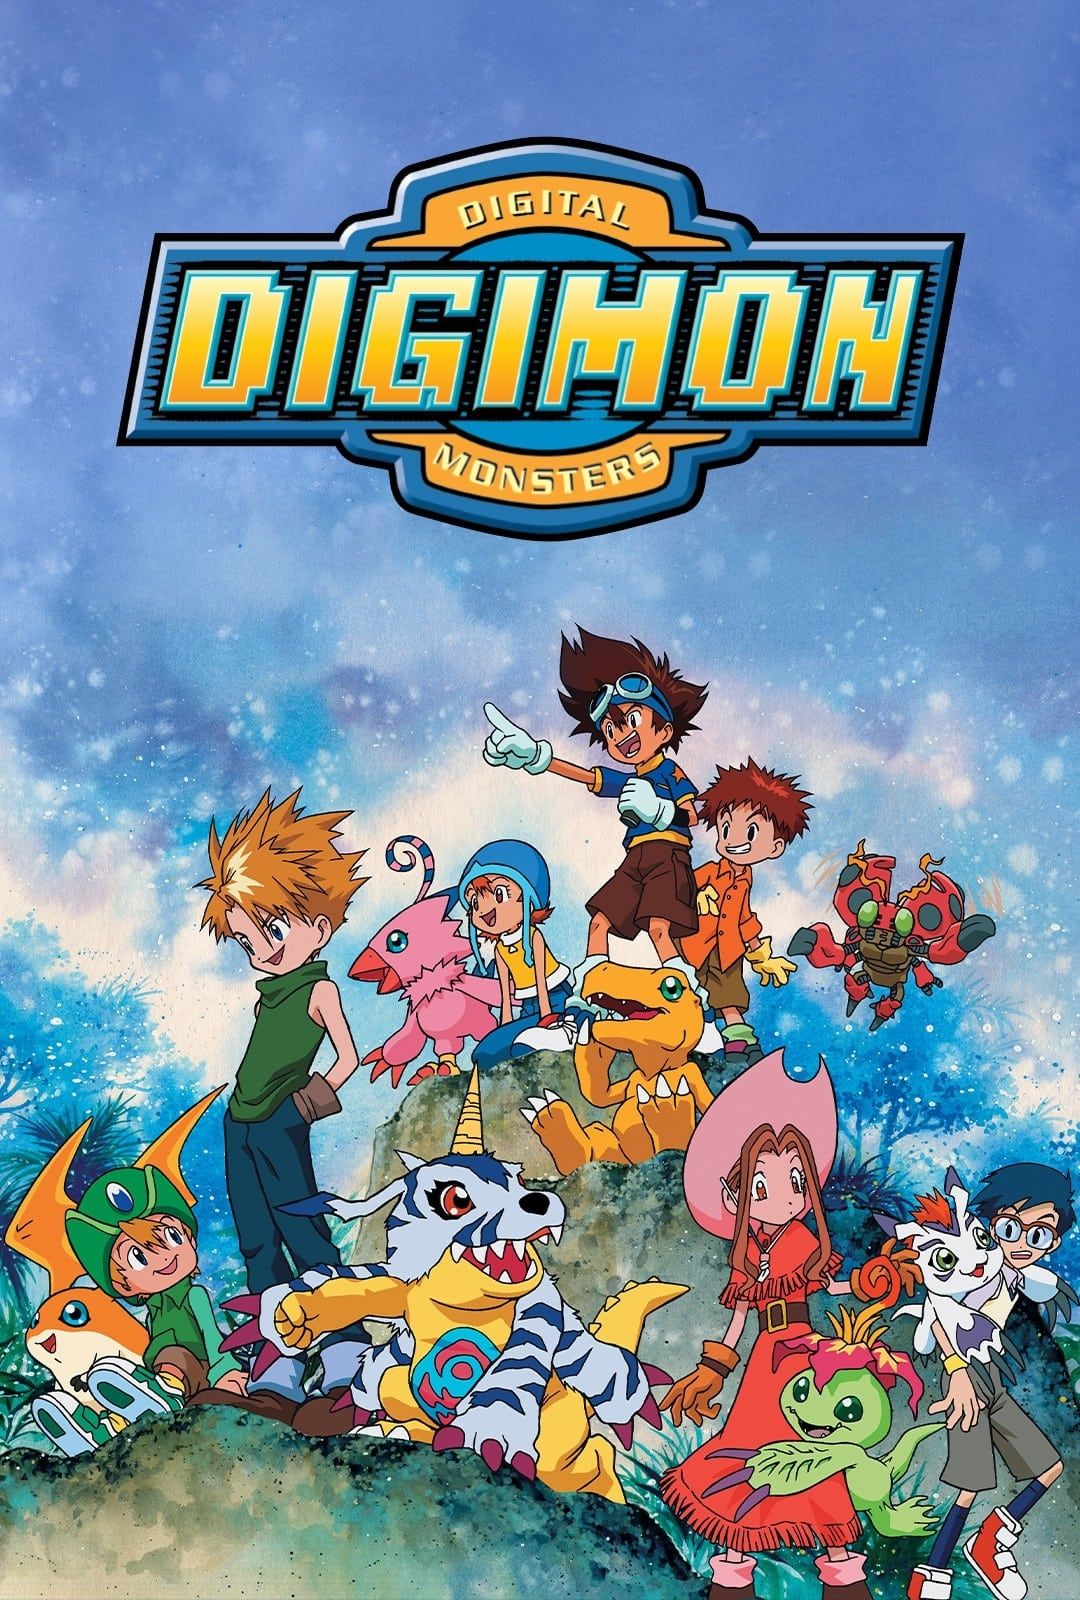 Assistir Digimon Ghost Game Todos os Episódios Online